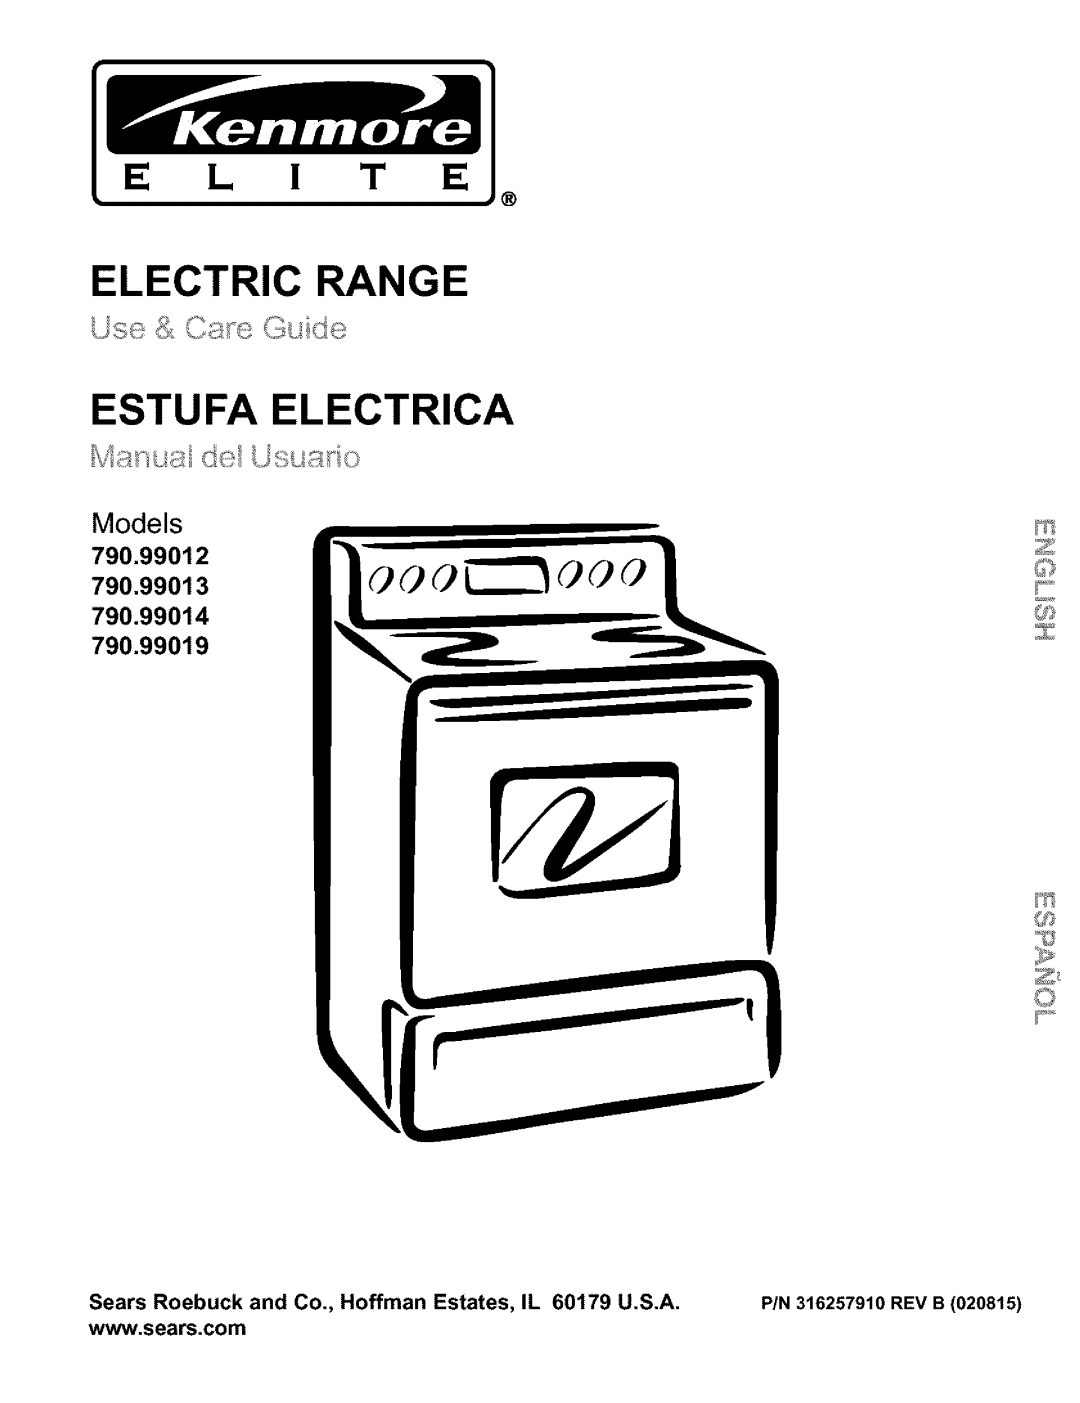 Kenmore manual Models, Electric Range Estufa Electrica, Ij_,Ilii, 790.99012 790.99013 790.99014 790.99019 